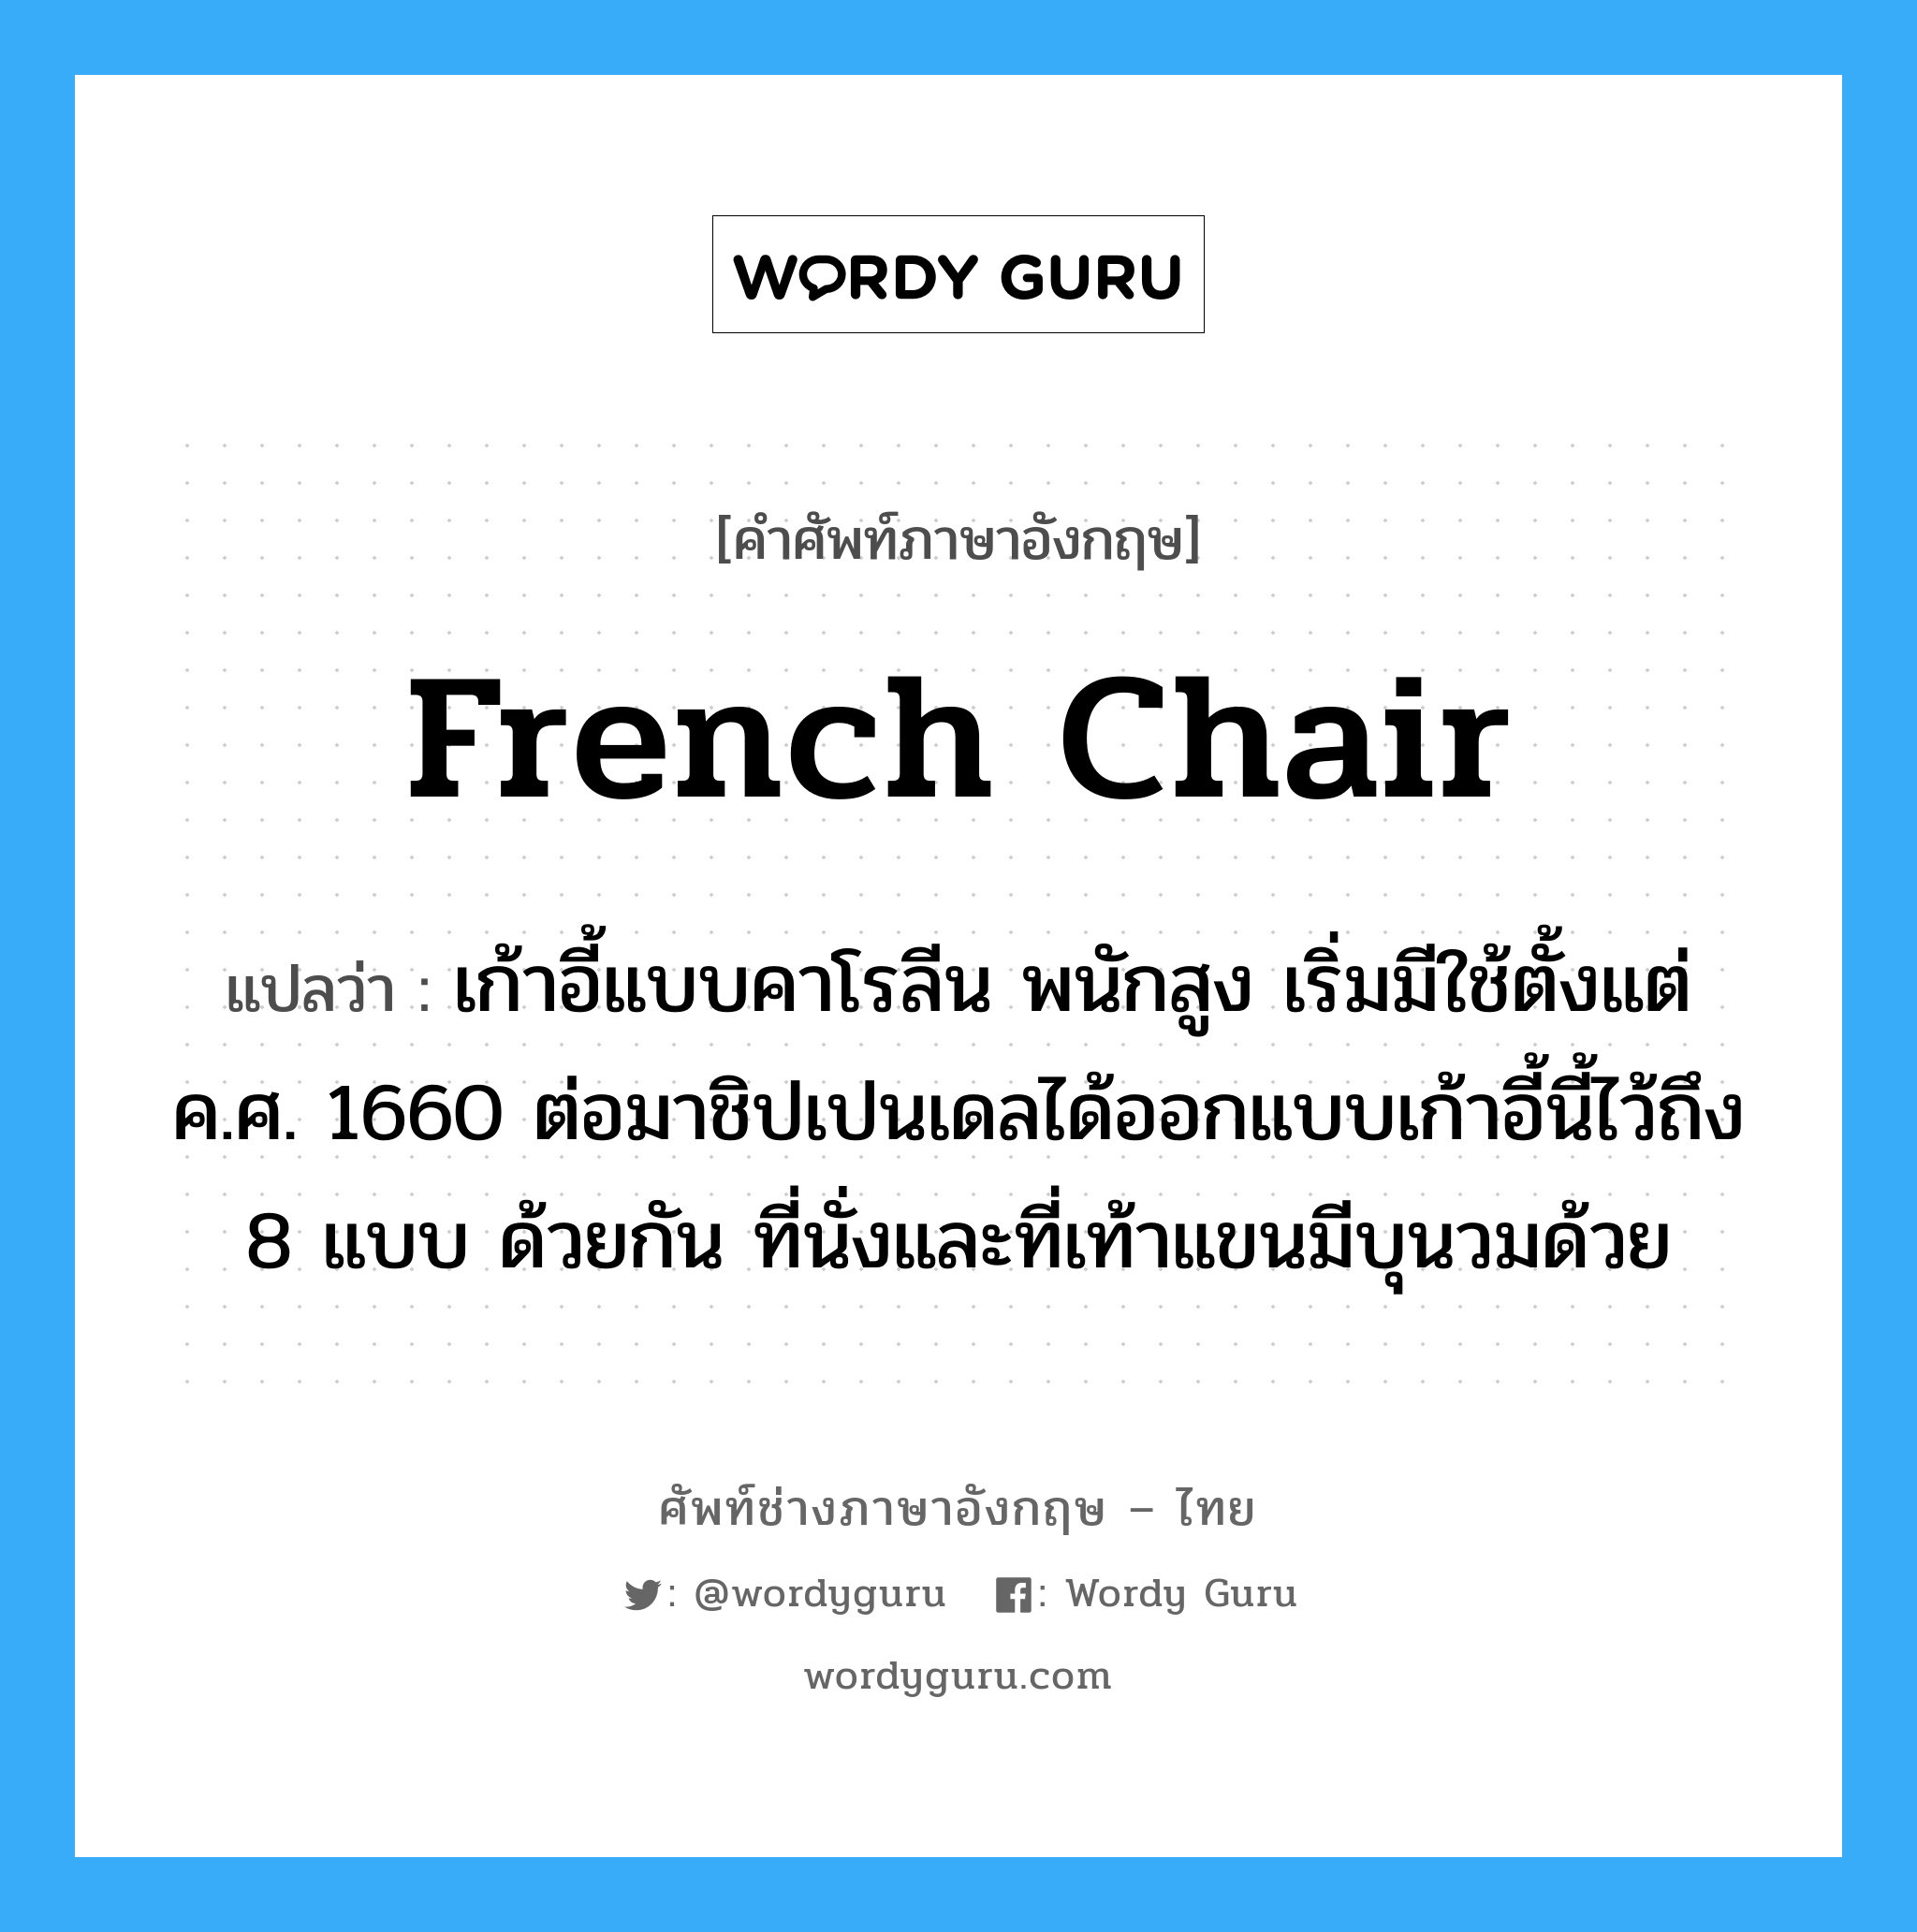 French chair แปลว่า?, คำศัพท์ช่างภาษาอังกฤษ - ไทย French chair คำศัพท์ภาษาอังกฤษ French chair แปลว่า เก้าอี้แบบคาโรลีน พนักสูง เริ่มมีใช้ตั้งแต่ ค.ศ. 1660 ต่อมาชิปเปนเดลได้ออกแบบเก้าอี้นี้ไว้ถึง 8 แบบ ด้วยกัน ที่นั่งและที่เท้าแขนมีบุนวมด้วย